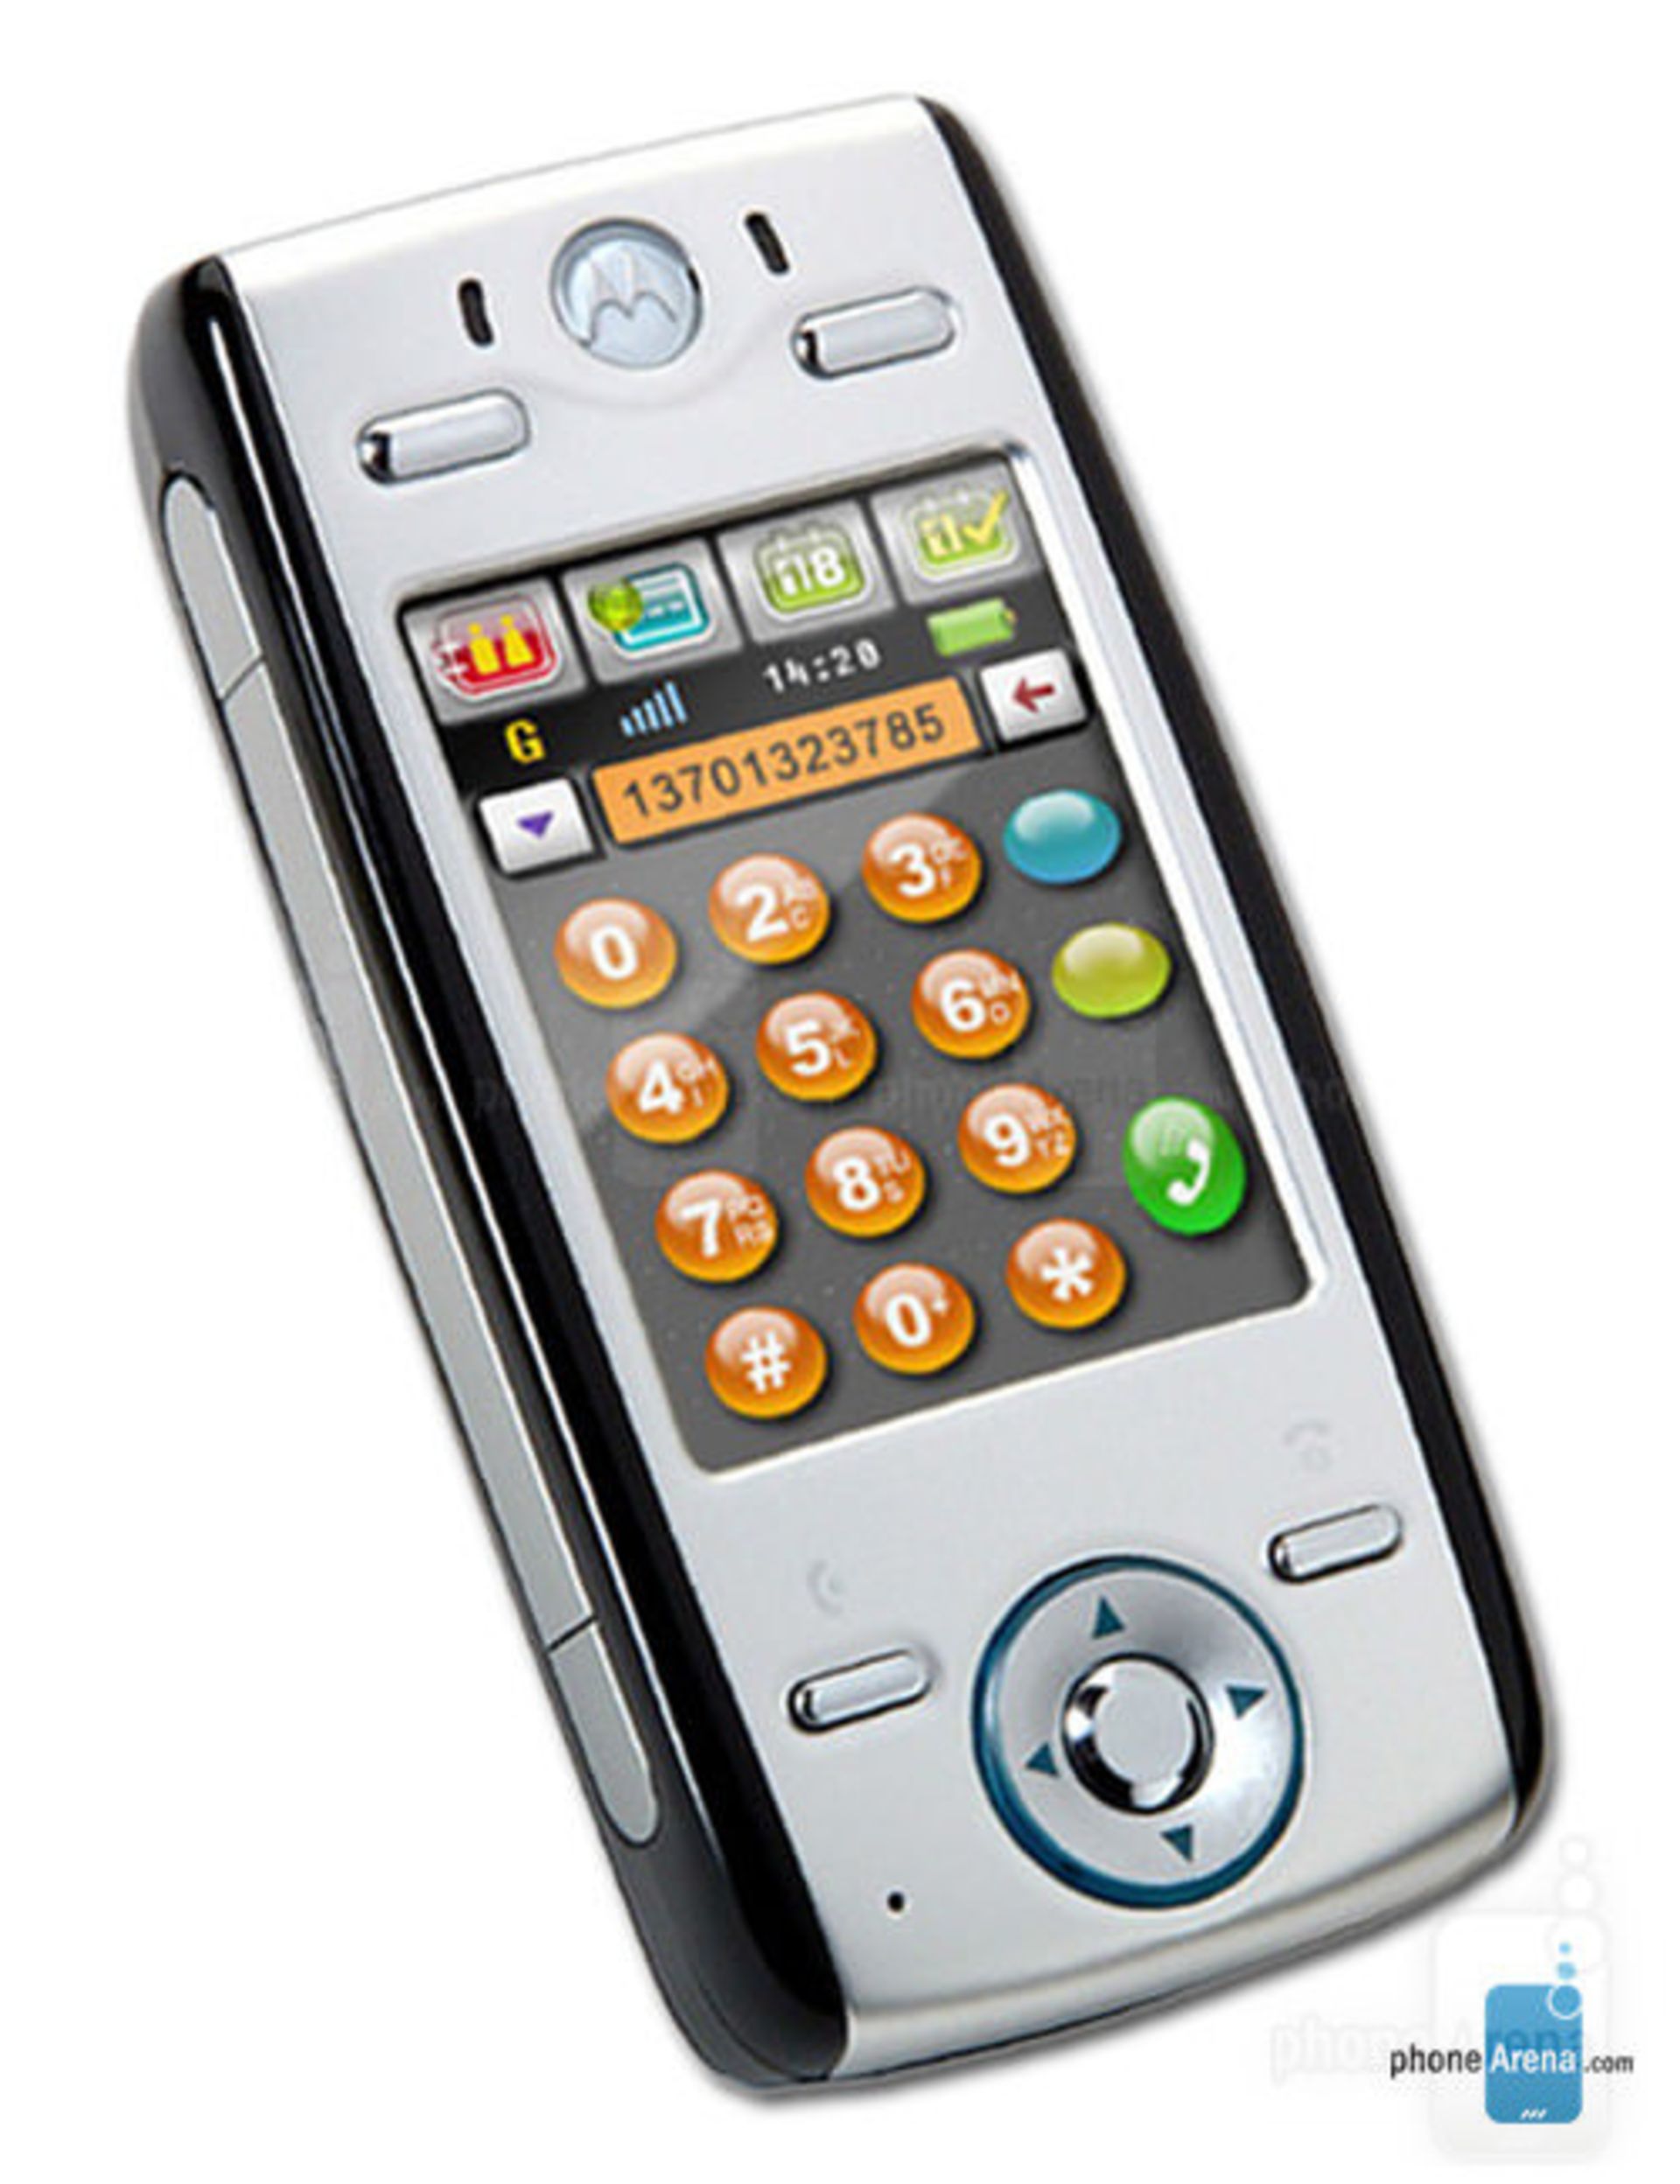 The Motorola E680